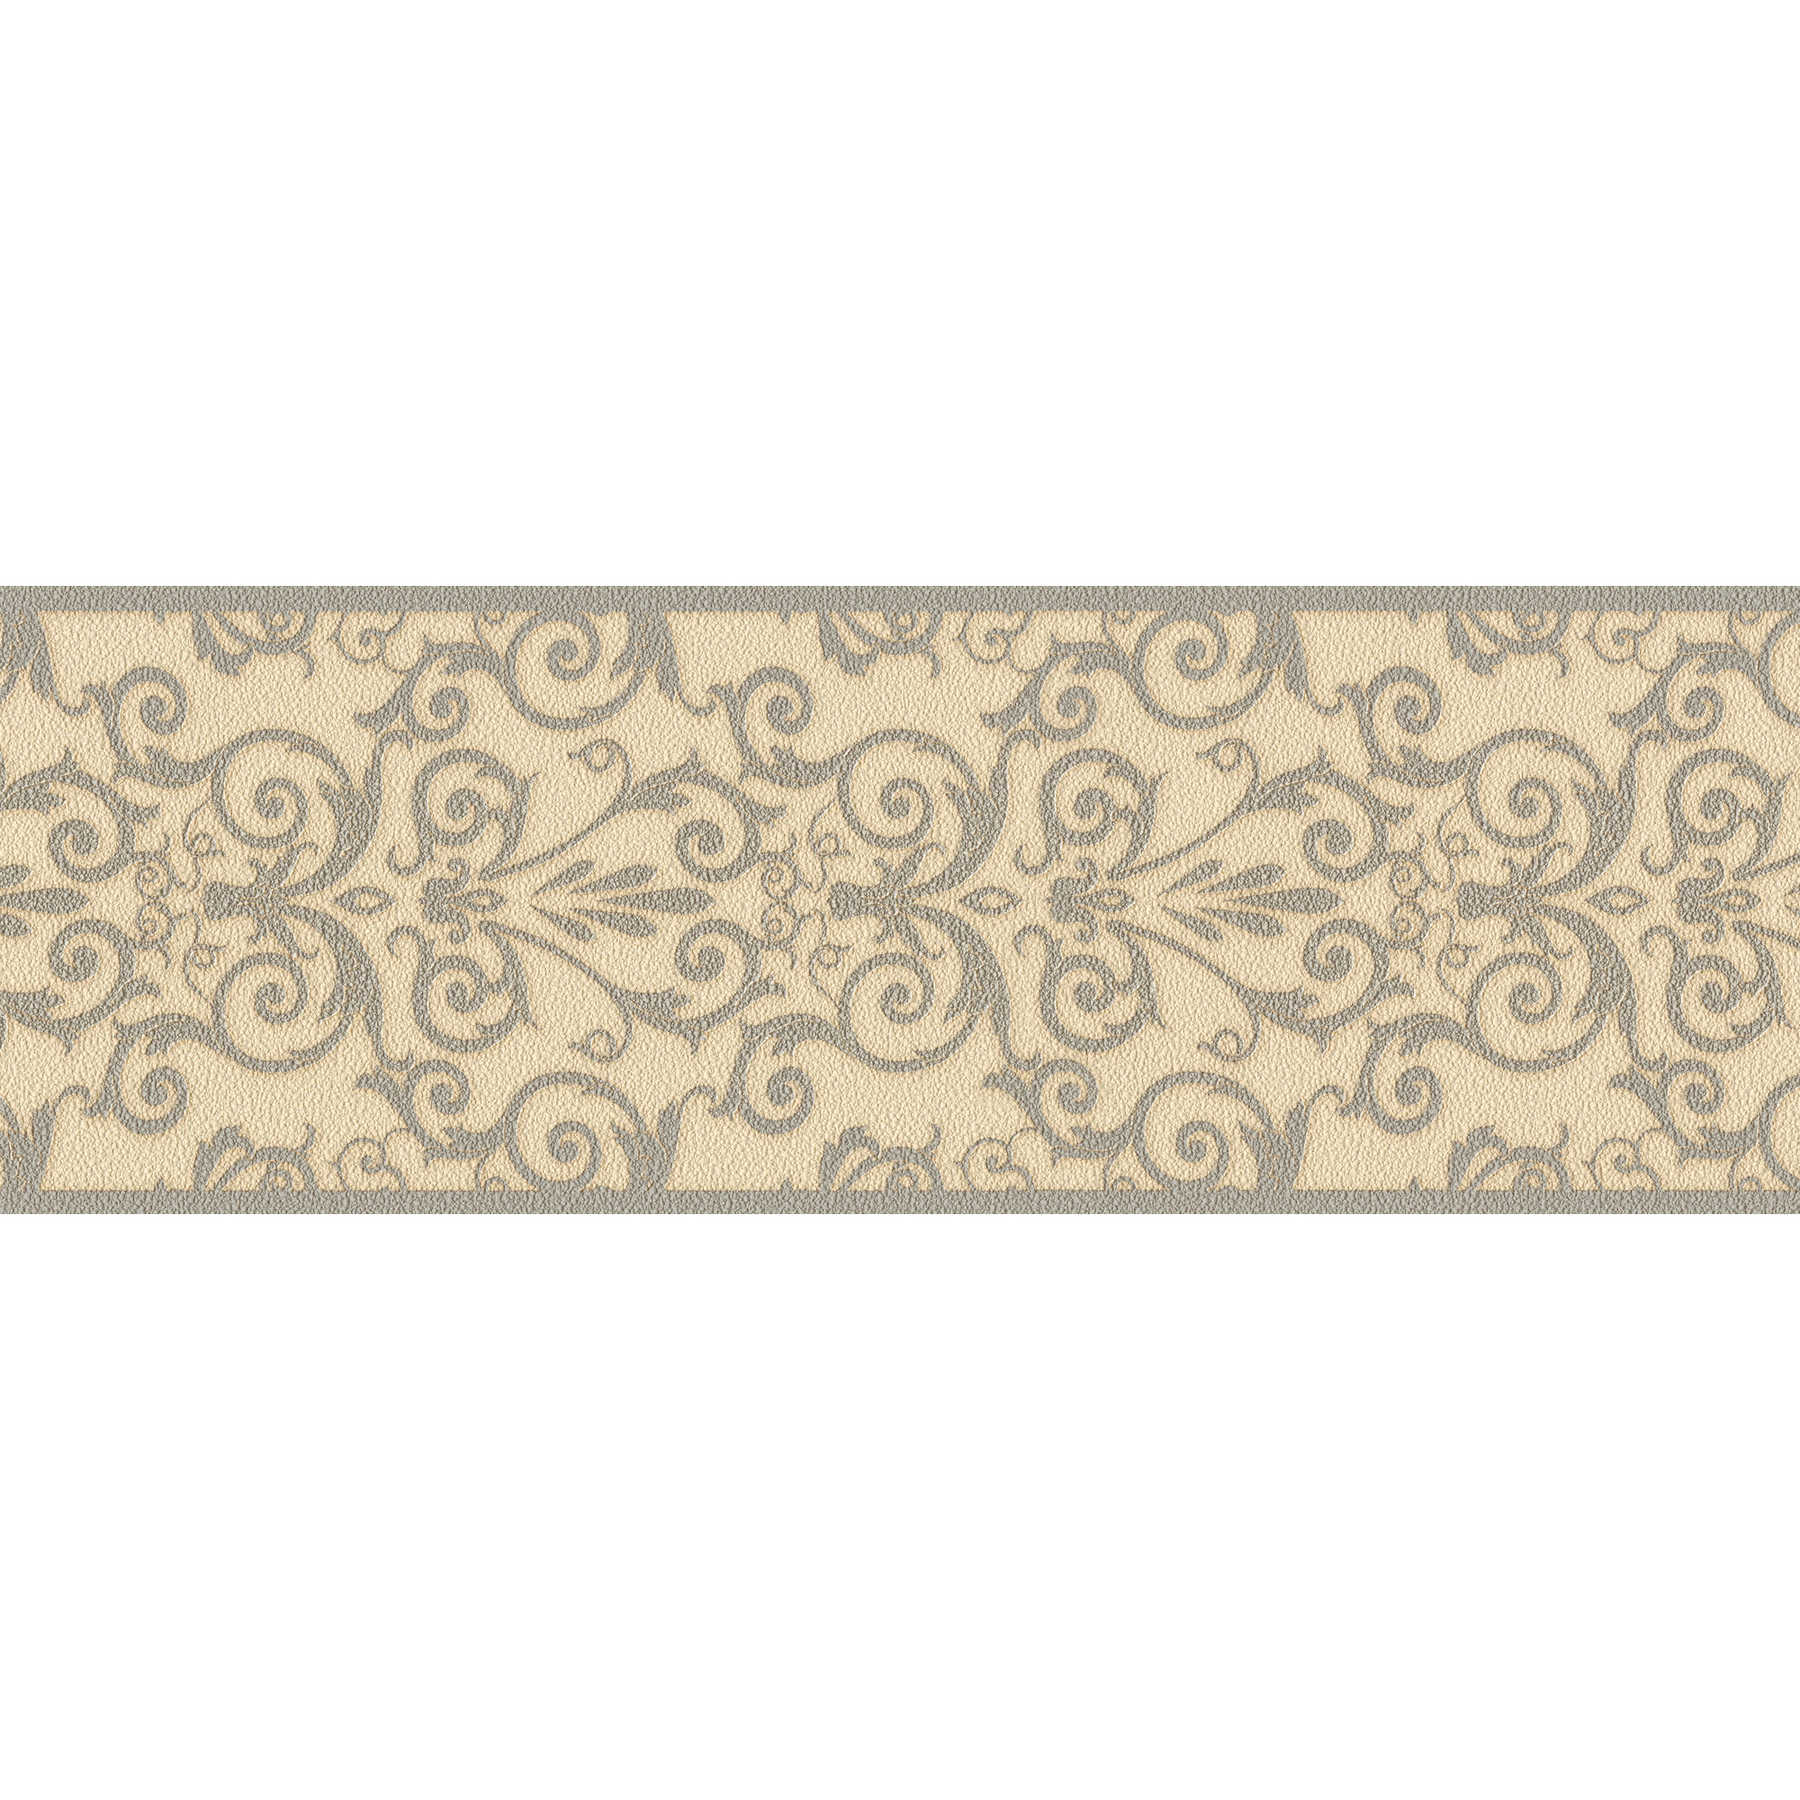 Wallpaper border VERSACE with metallic ornament - cream
